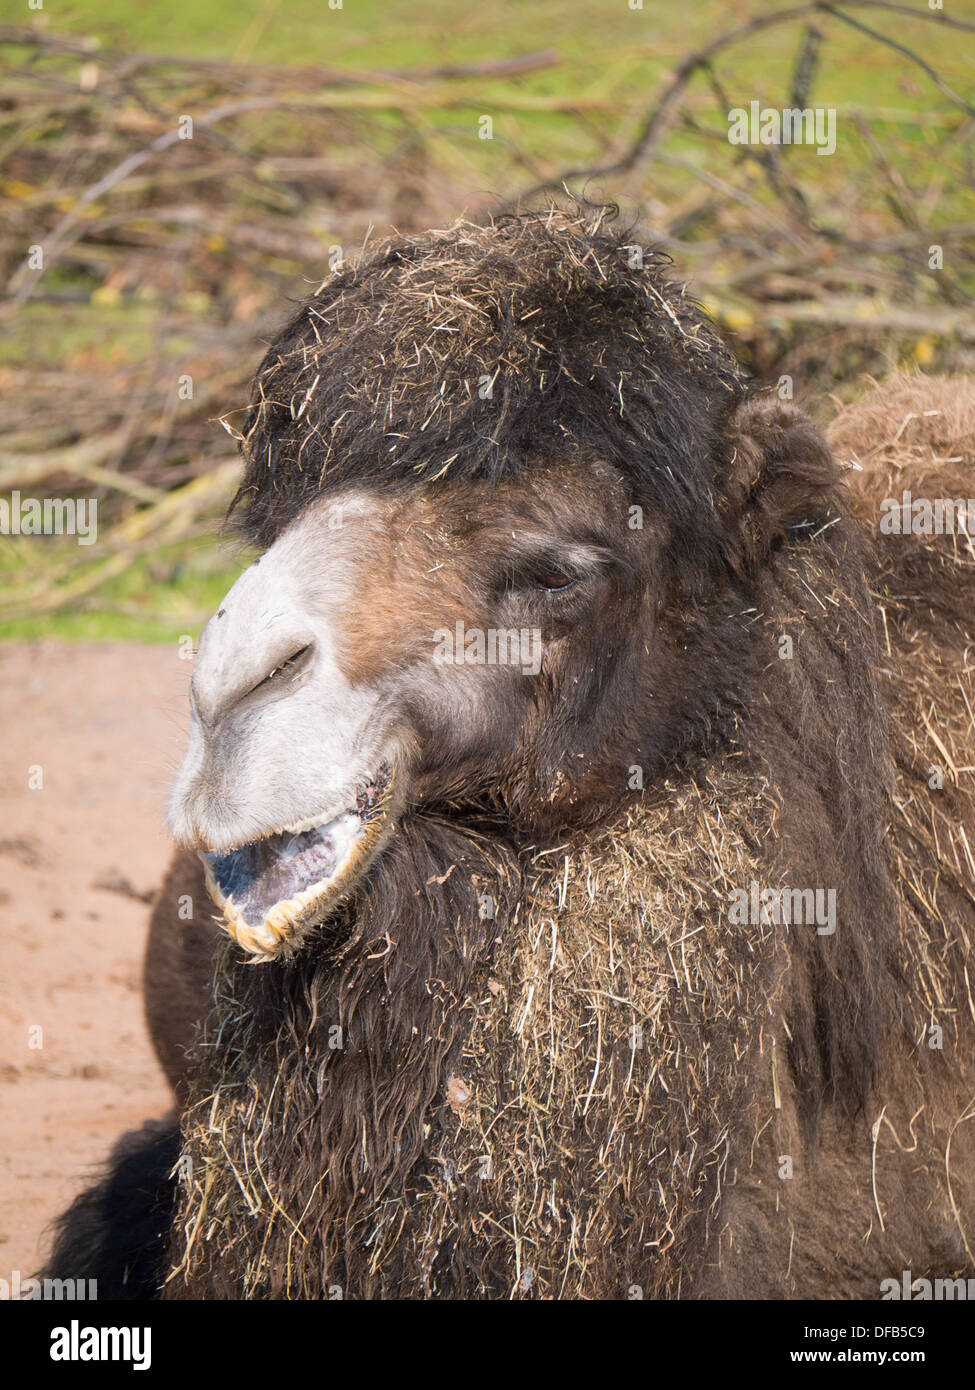 A Camel (Bactrian Camel) at Twycross Zoo, Tamworth, United Kingdom. Stock Photo